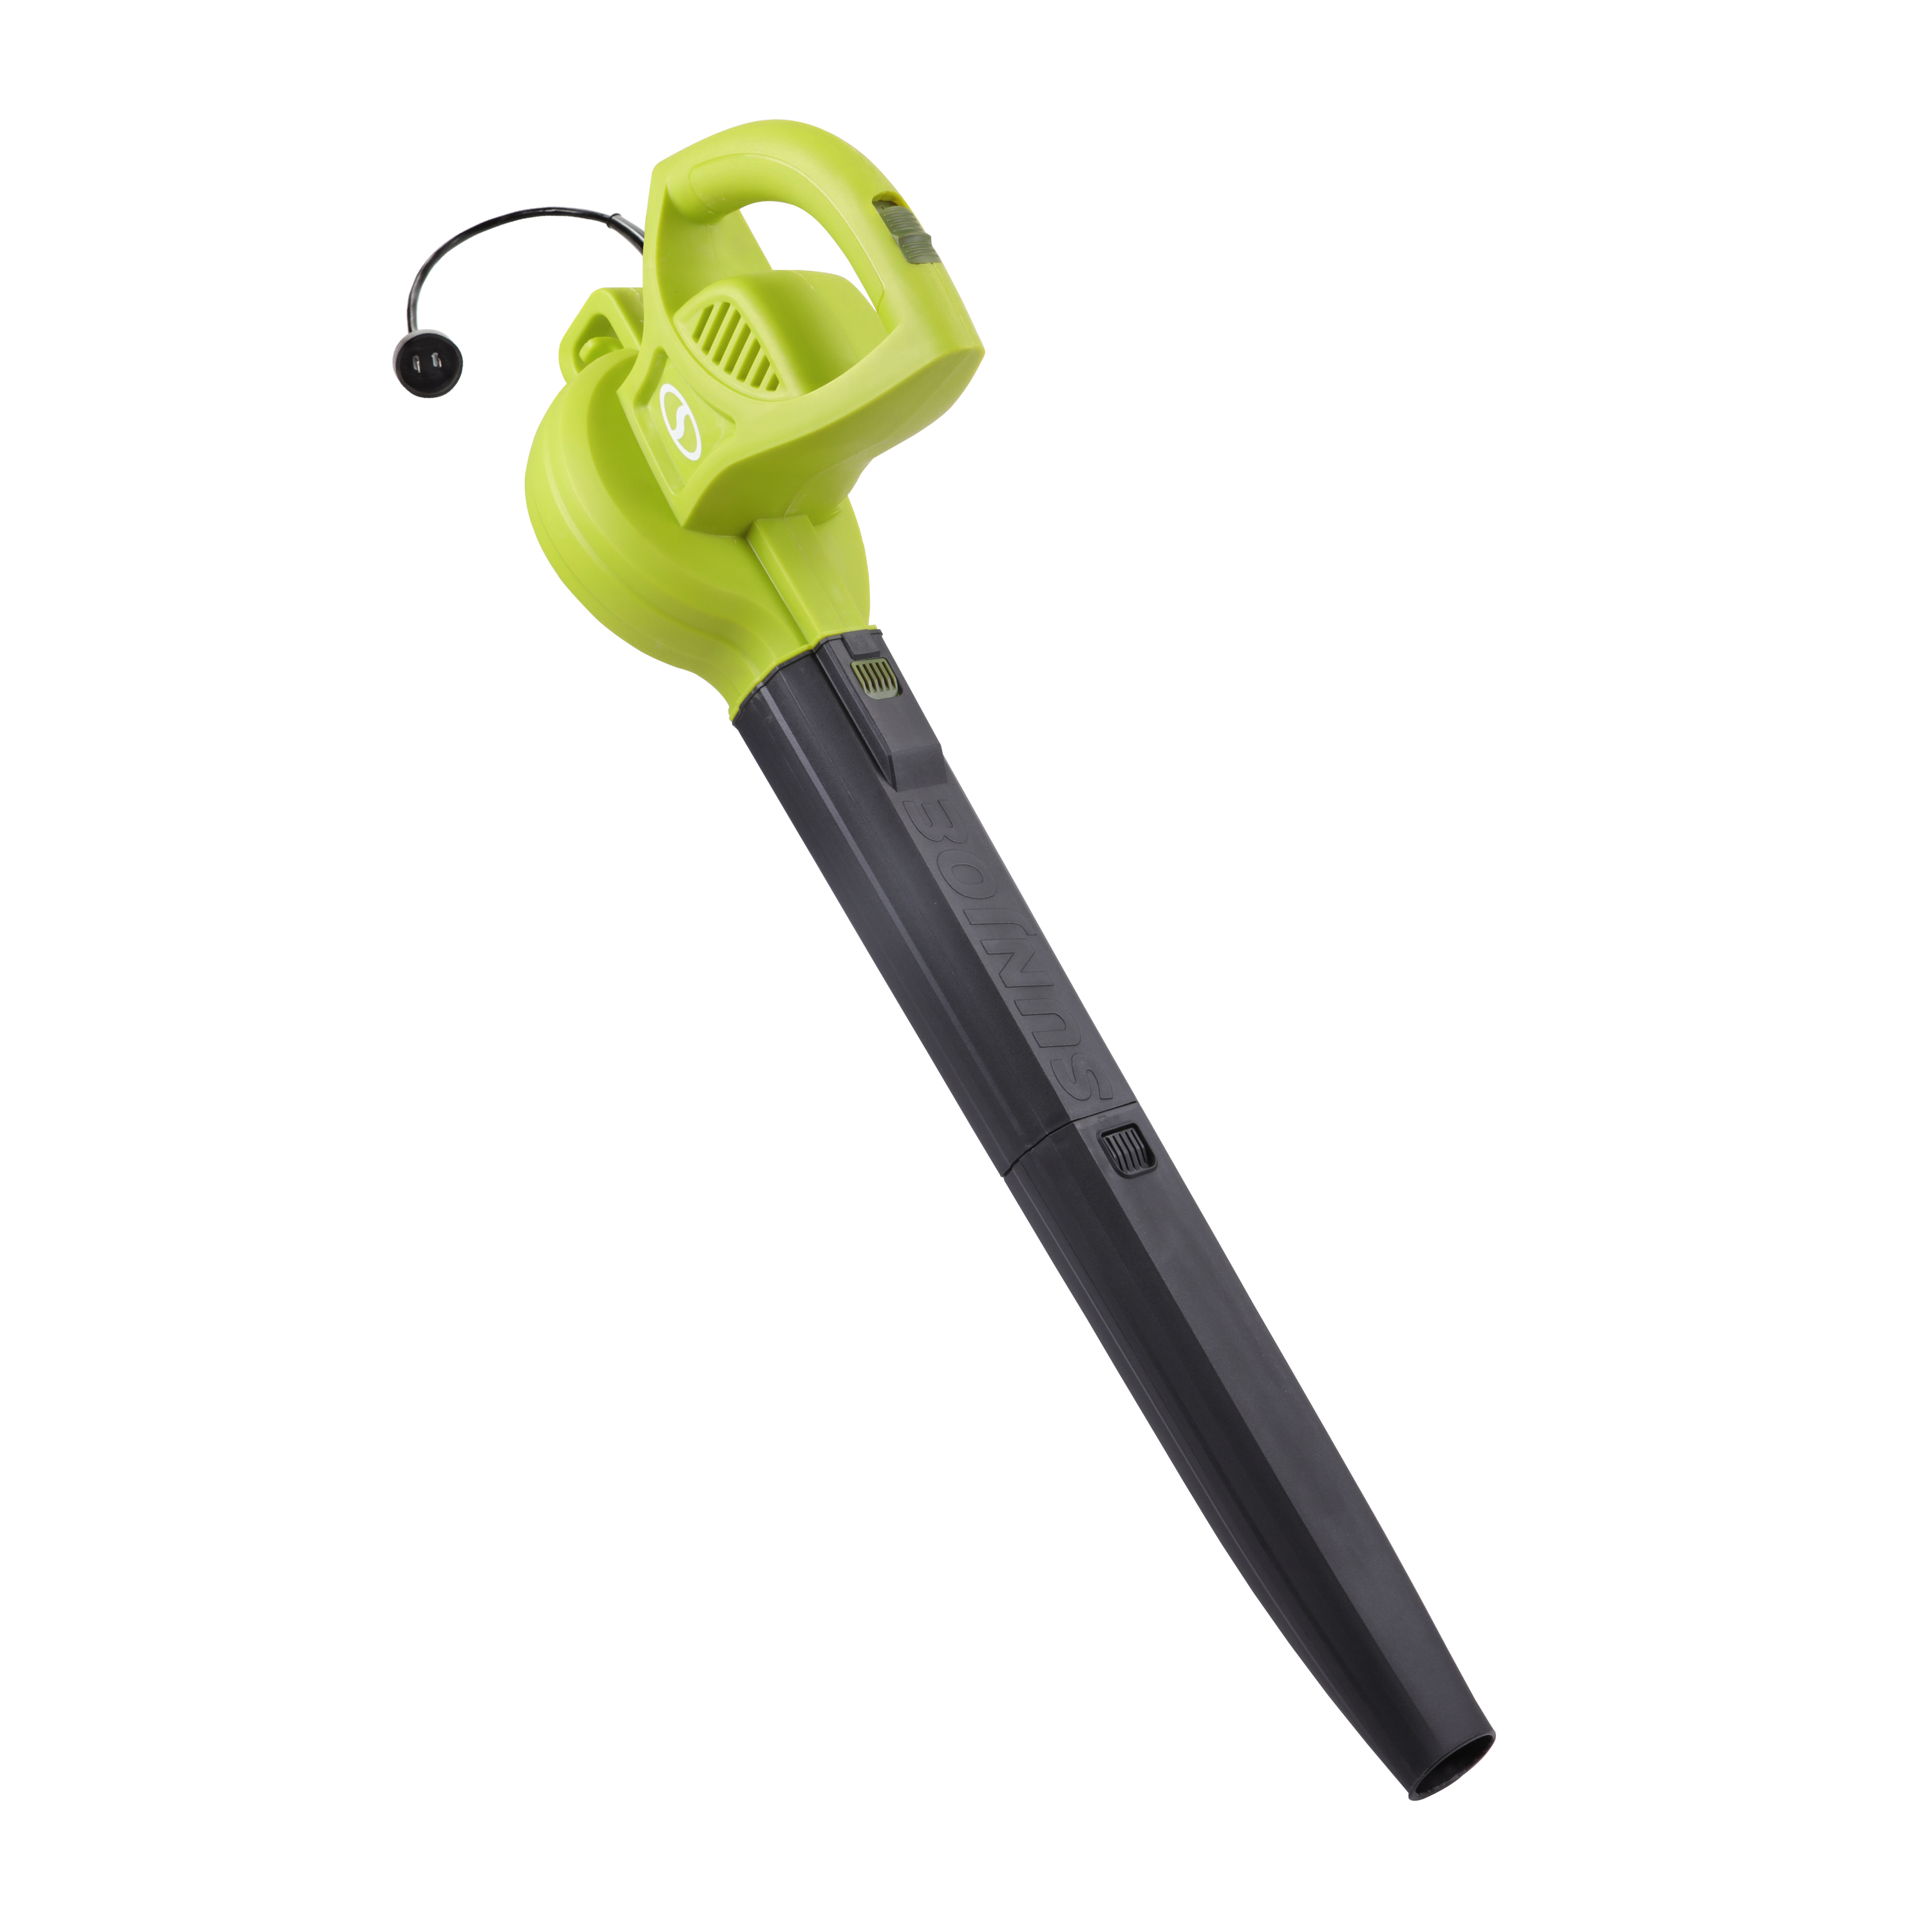 Sun Joe All-Purpose Electric Leaf Blower, 6-Amp, 155-mph, 260-CFM - Green - image 3 of 11